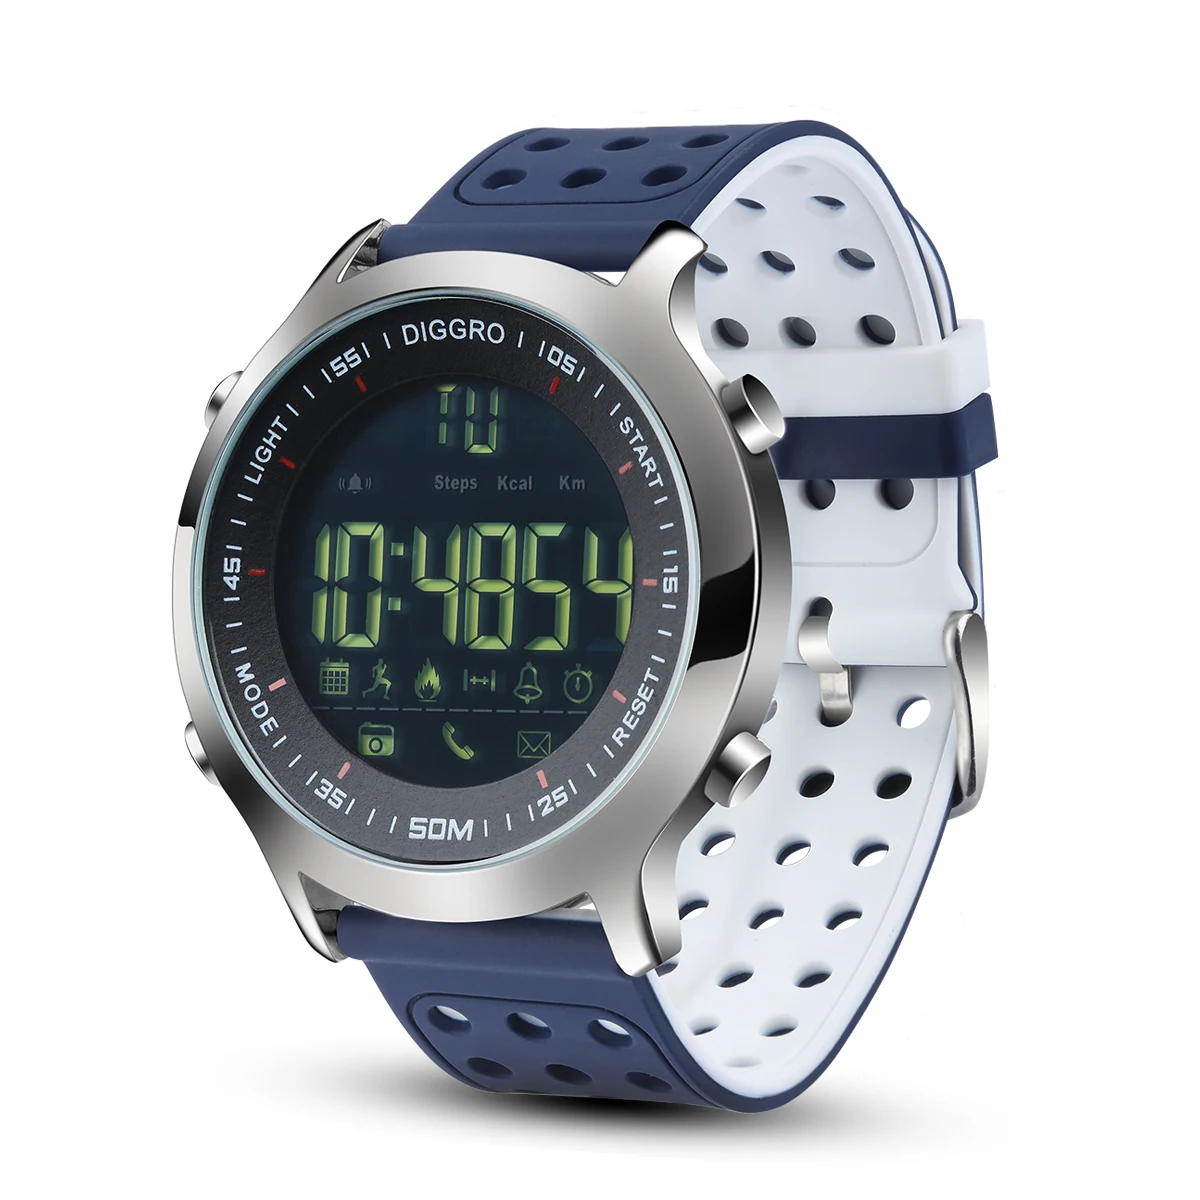 Умные часы Diggro DI04, IP68, водонепроницаемые, 5 АТМ, шагомер, напоминание о сообщениях, для плавания, фитнес-часы для Android, IOS, умные часы - Цвет: Blue And White